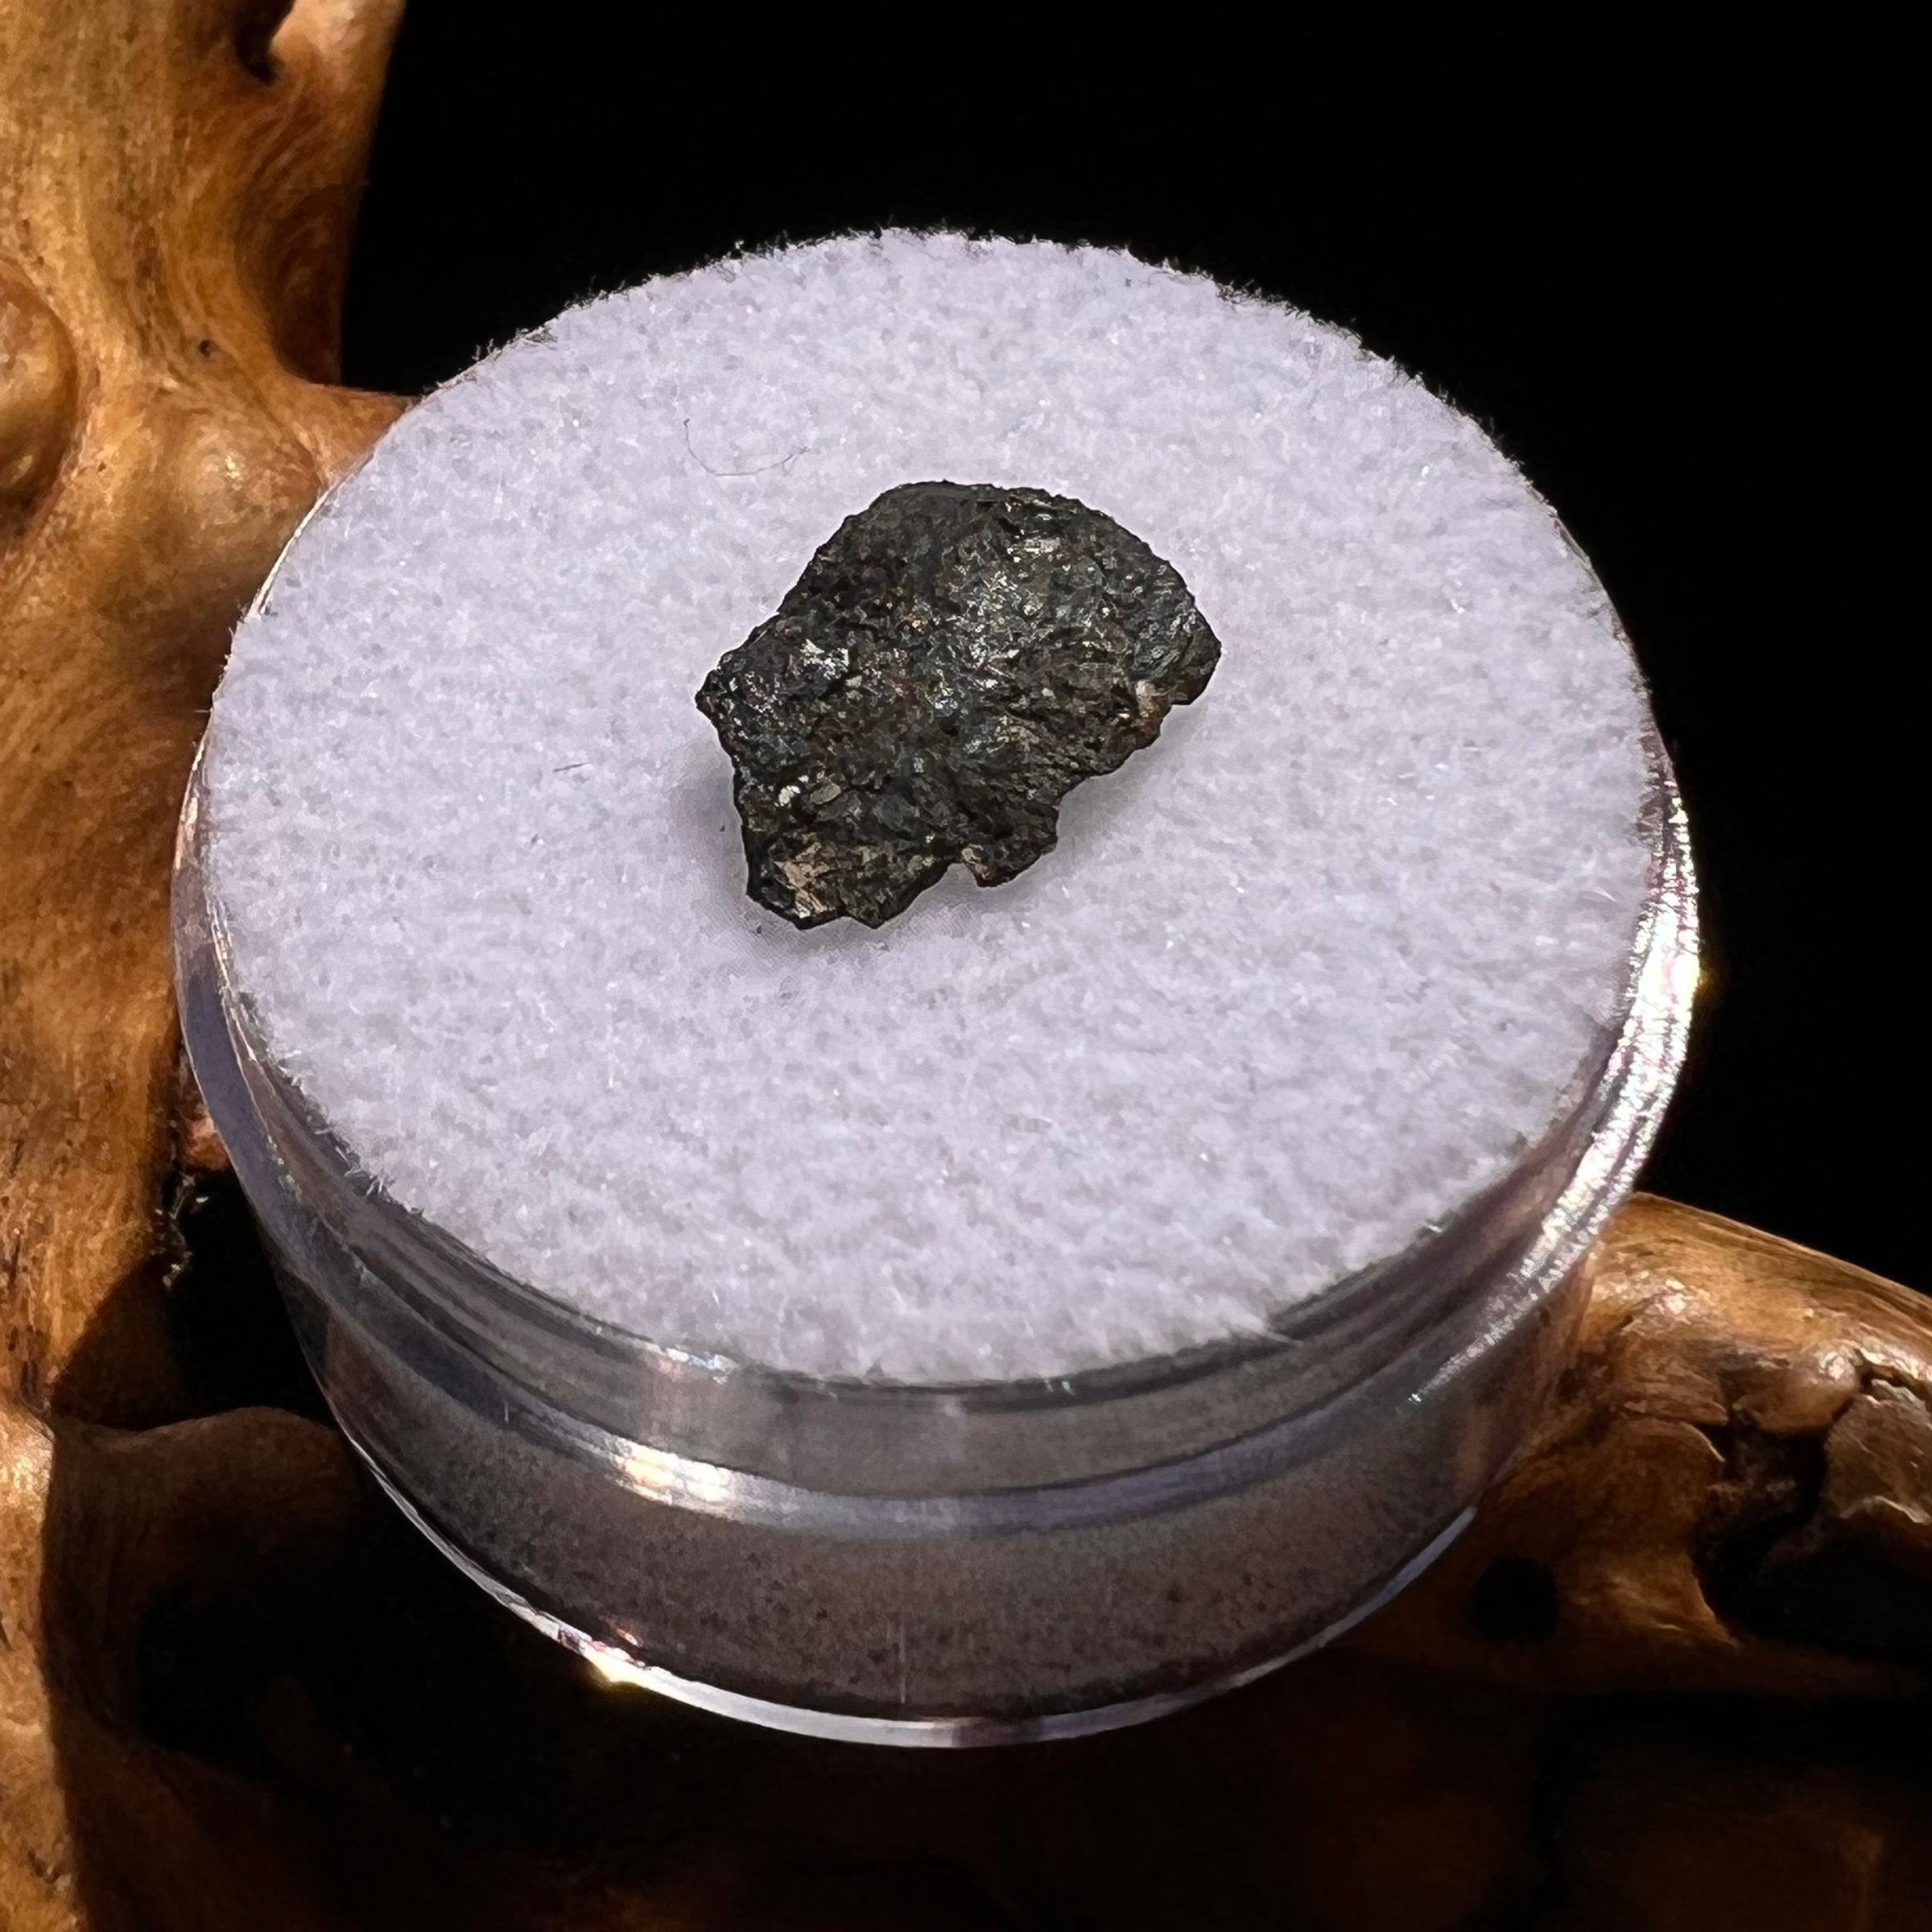 Chelyabinsk Meteorite Superbolide Asteroid 0.3 grams #79-Moldavite Life